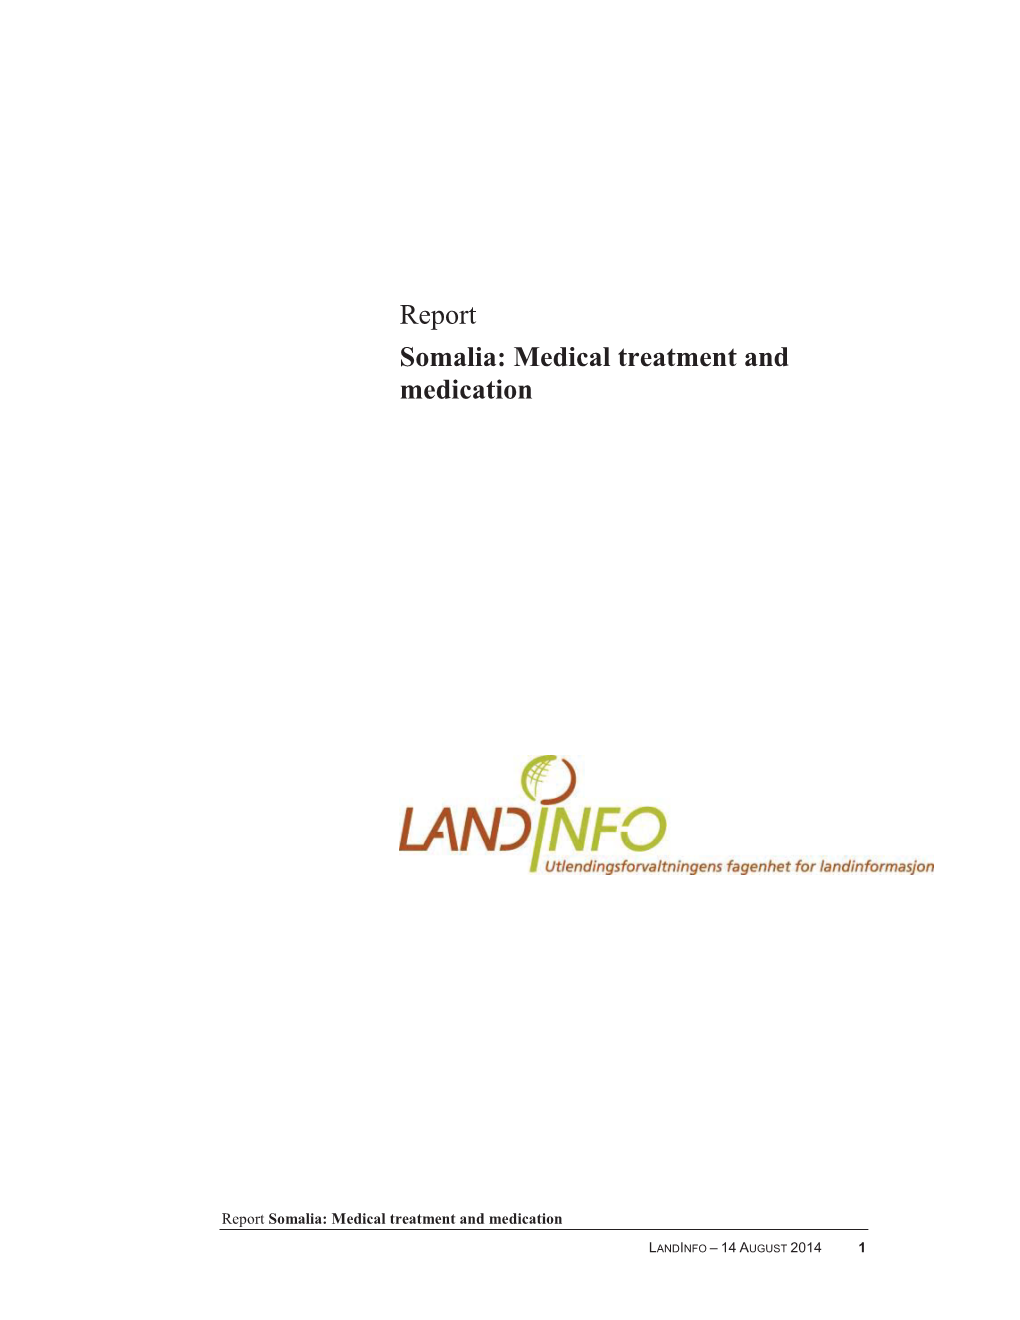 Report Somalia: Medical Treatment and Medication